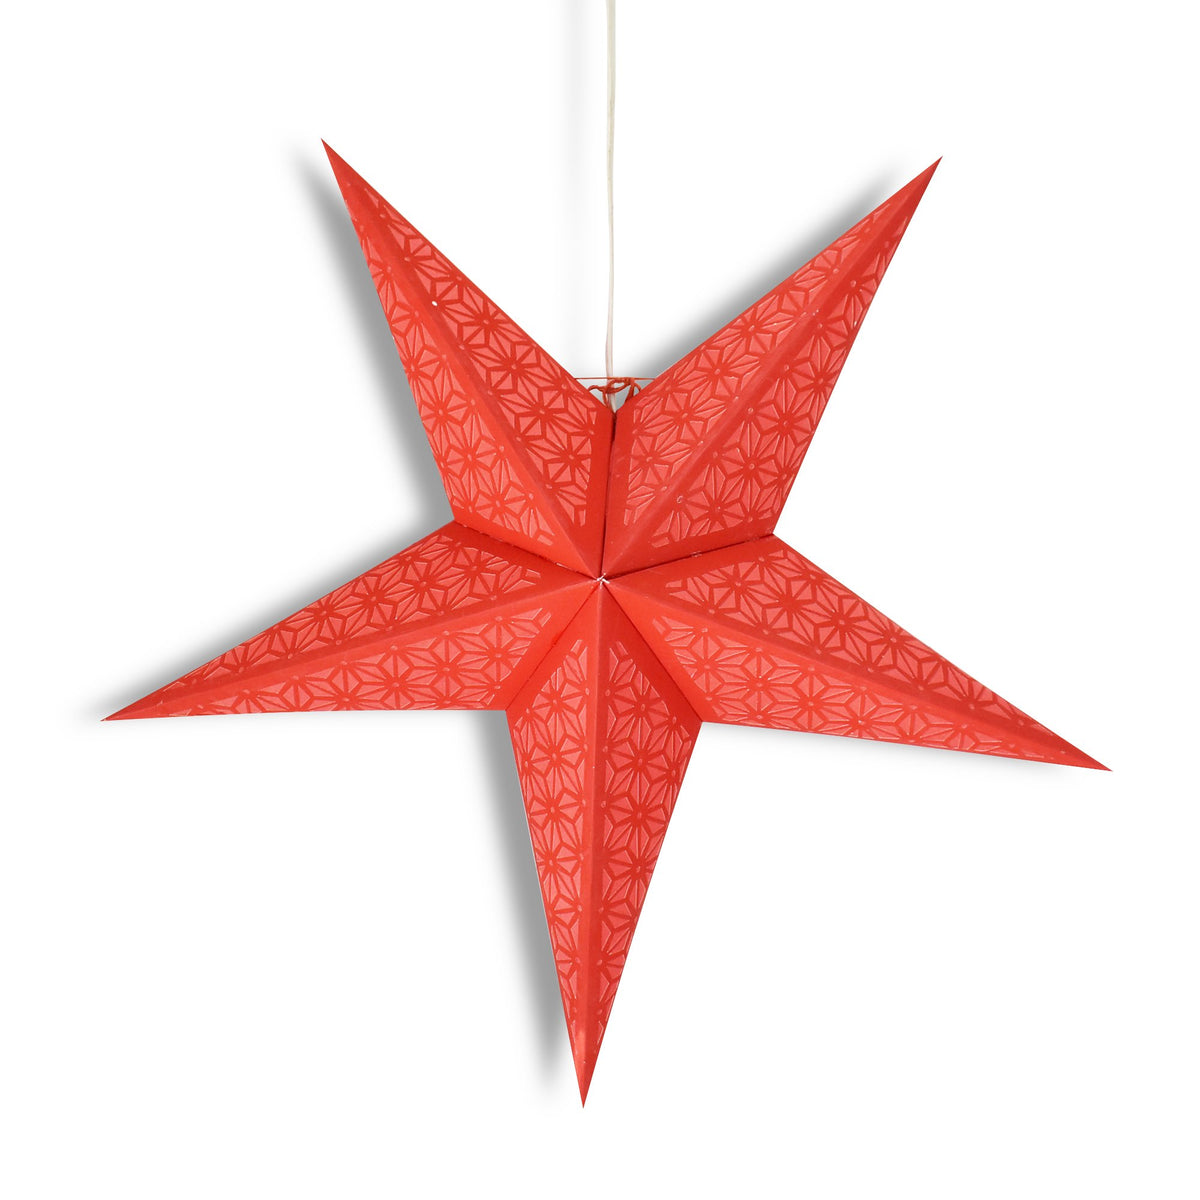 24&quot; Red Geodesic Paper Star Lantern, Hanging Wedding &amp; Party Decoration - PaperLanternStore.com - Paper Lanterns, Decor, Party Lights &amp; More